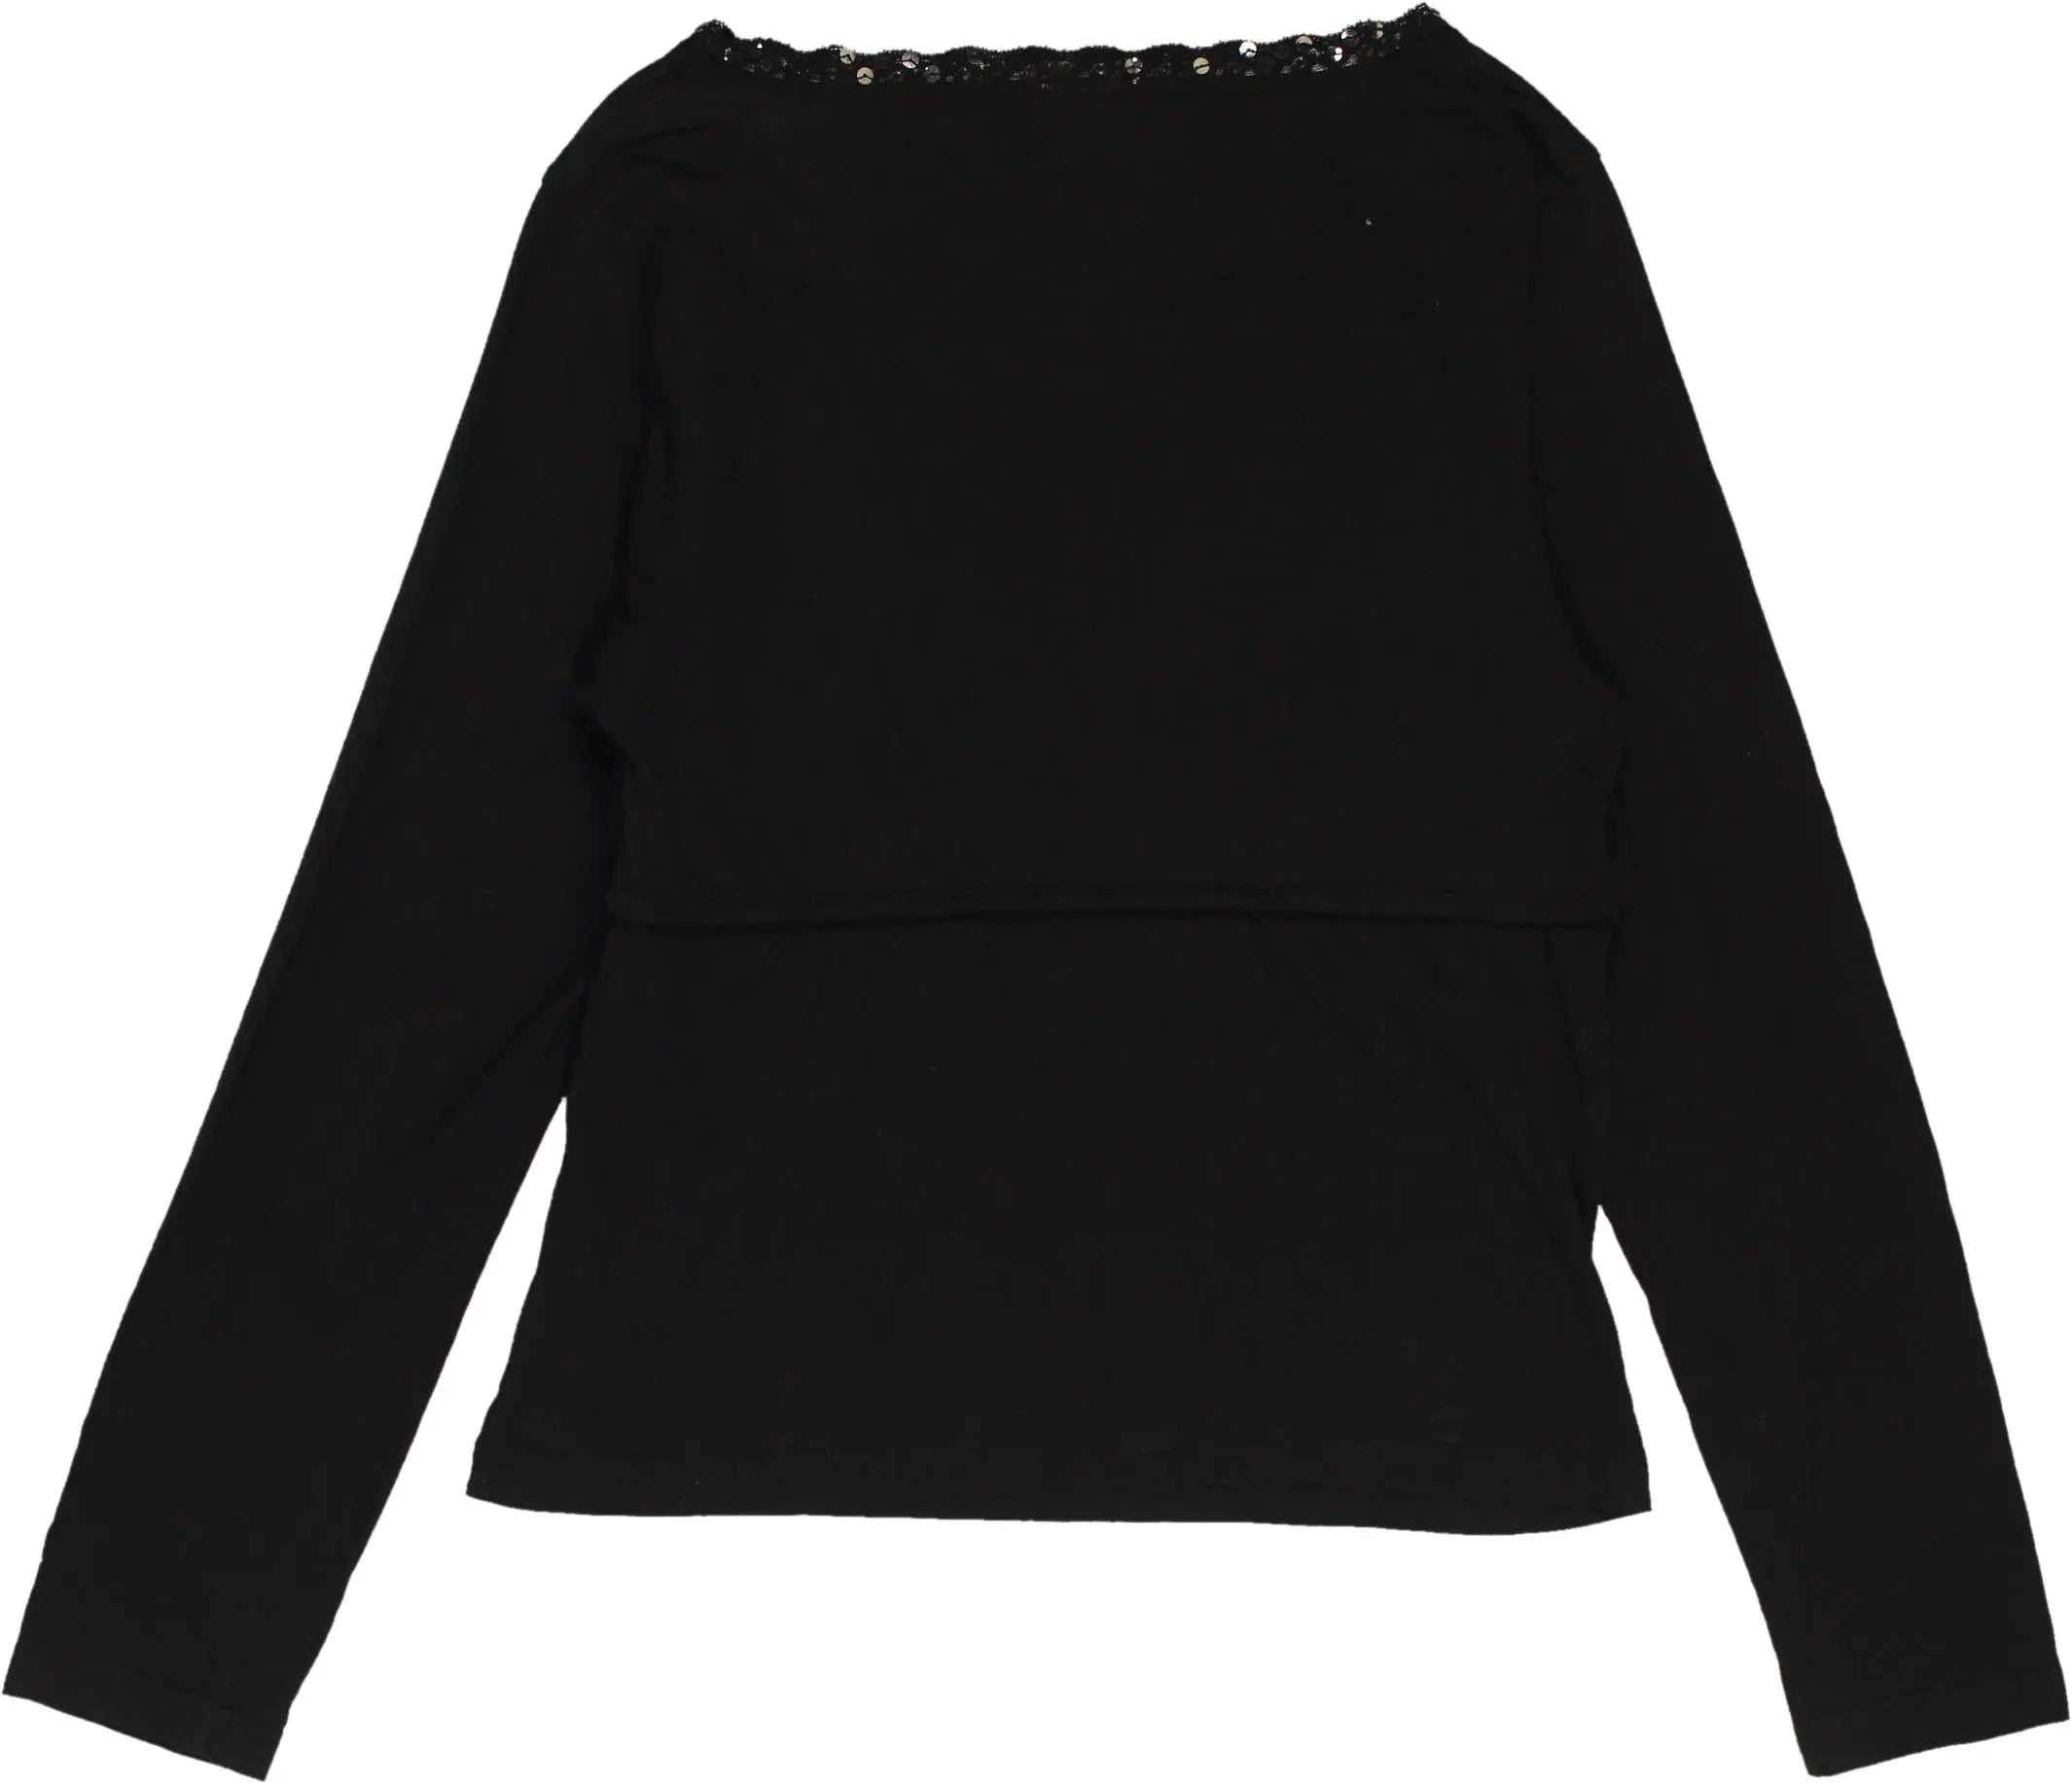 Dress2Go - Black bolero top- ThriftTale.com - Vintage and second handclothing